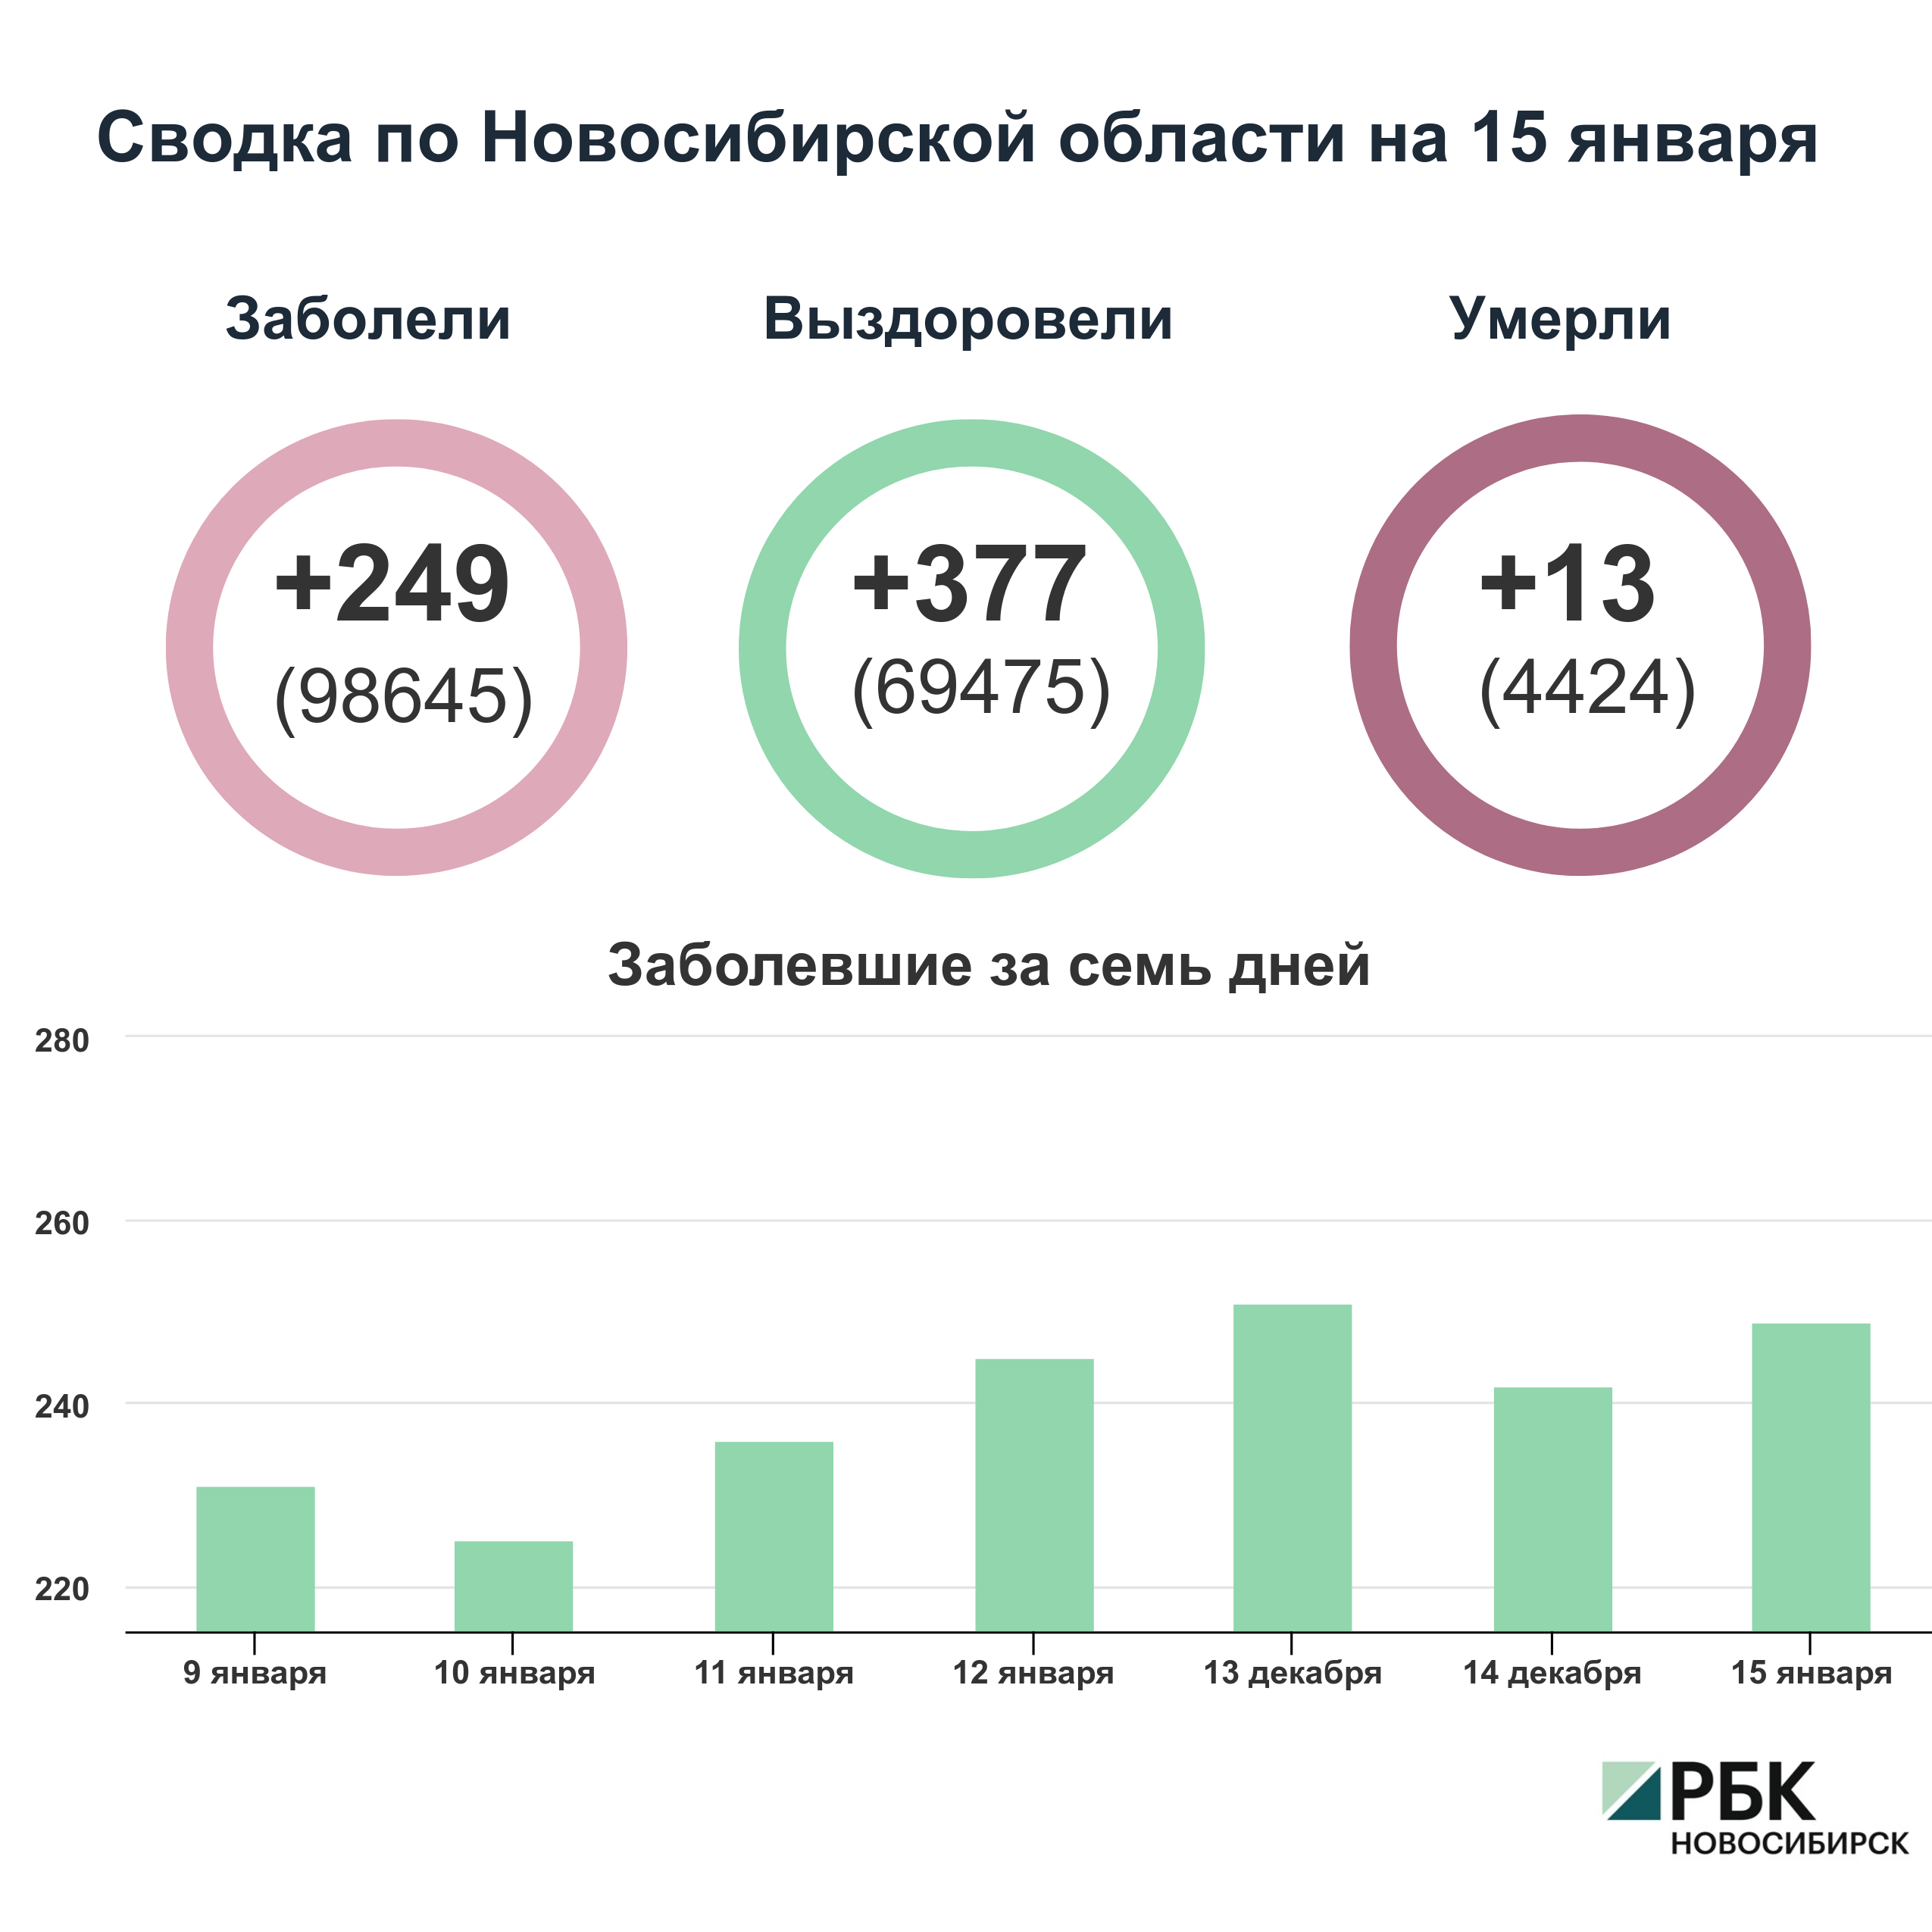 Коронавирус в Новосибирске: сводка на 15 января